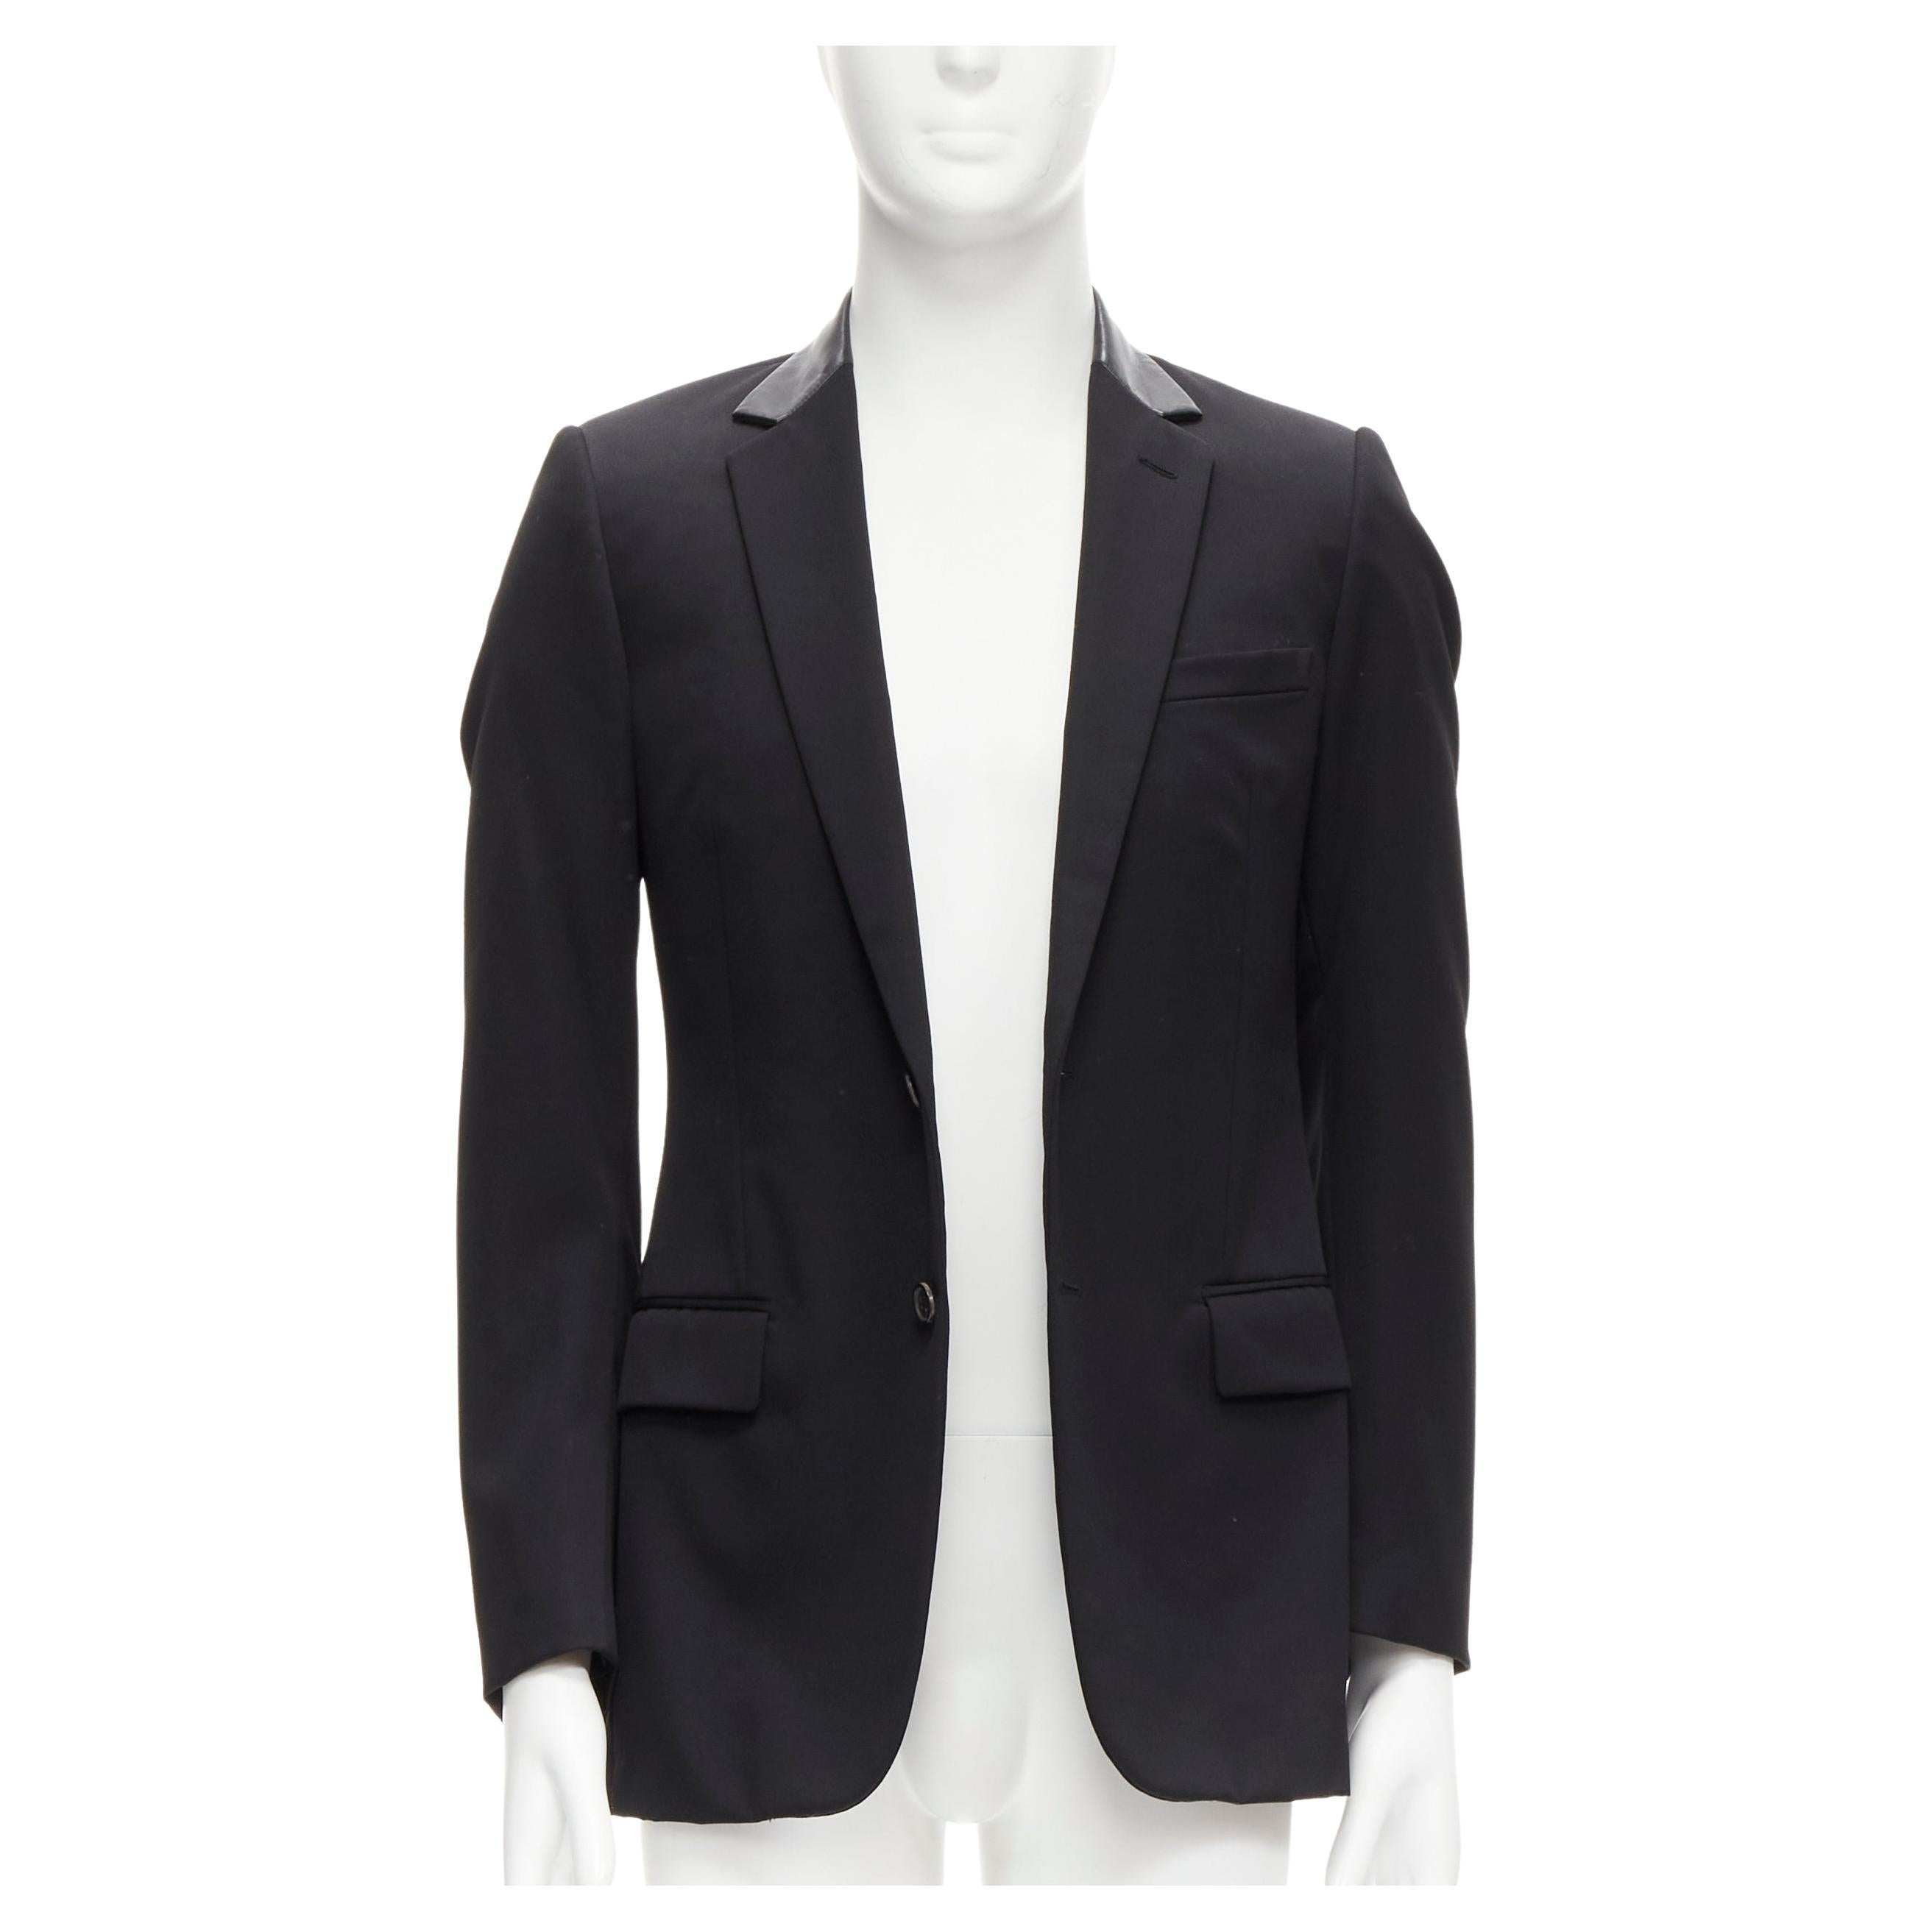 DIOR HOMME Hedi Slimane leather collar classic 2-button blazer jacket FR46 S